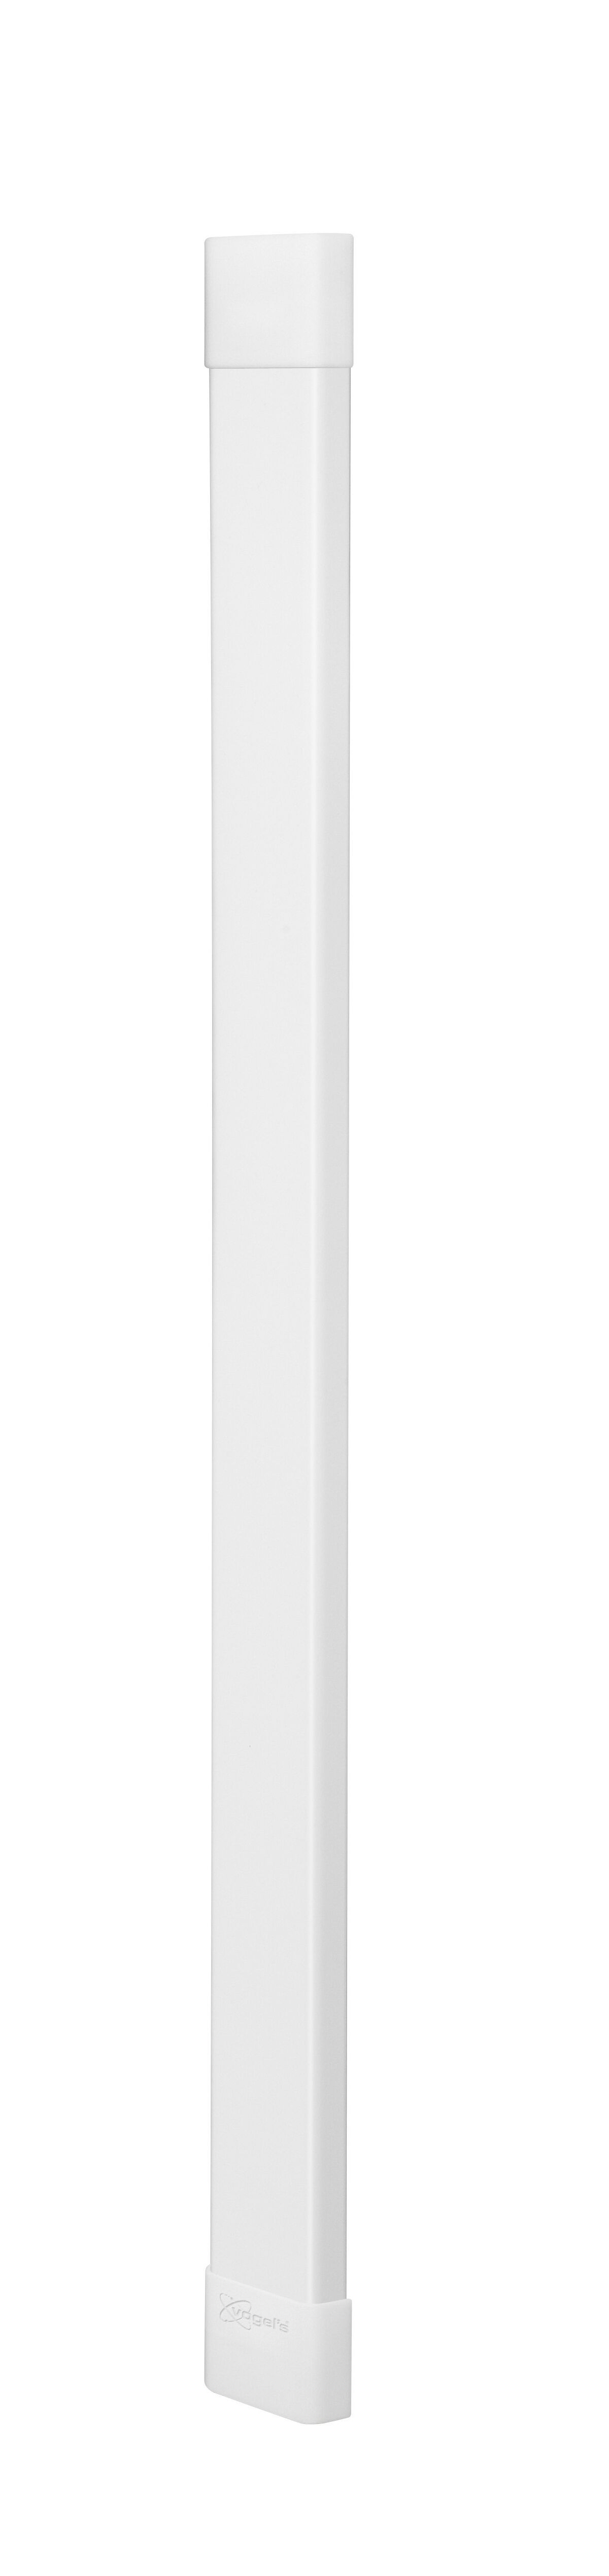 Vogel's CABLE 8 kabelgoot (wit) - Max. aantal kabels in kabelgoot: Tot 8 kabels - Lengte: Product